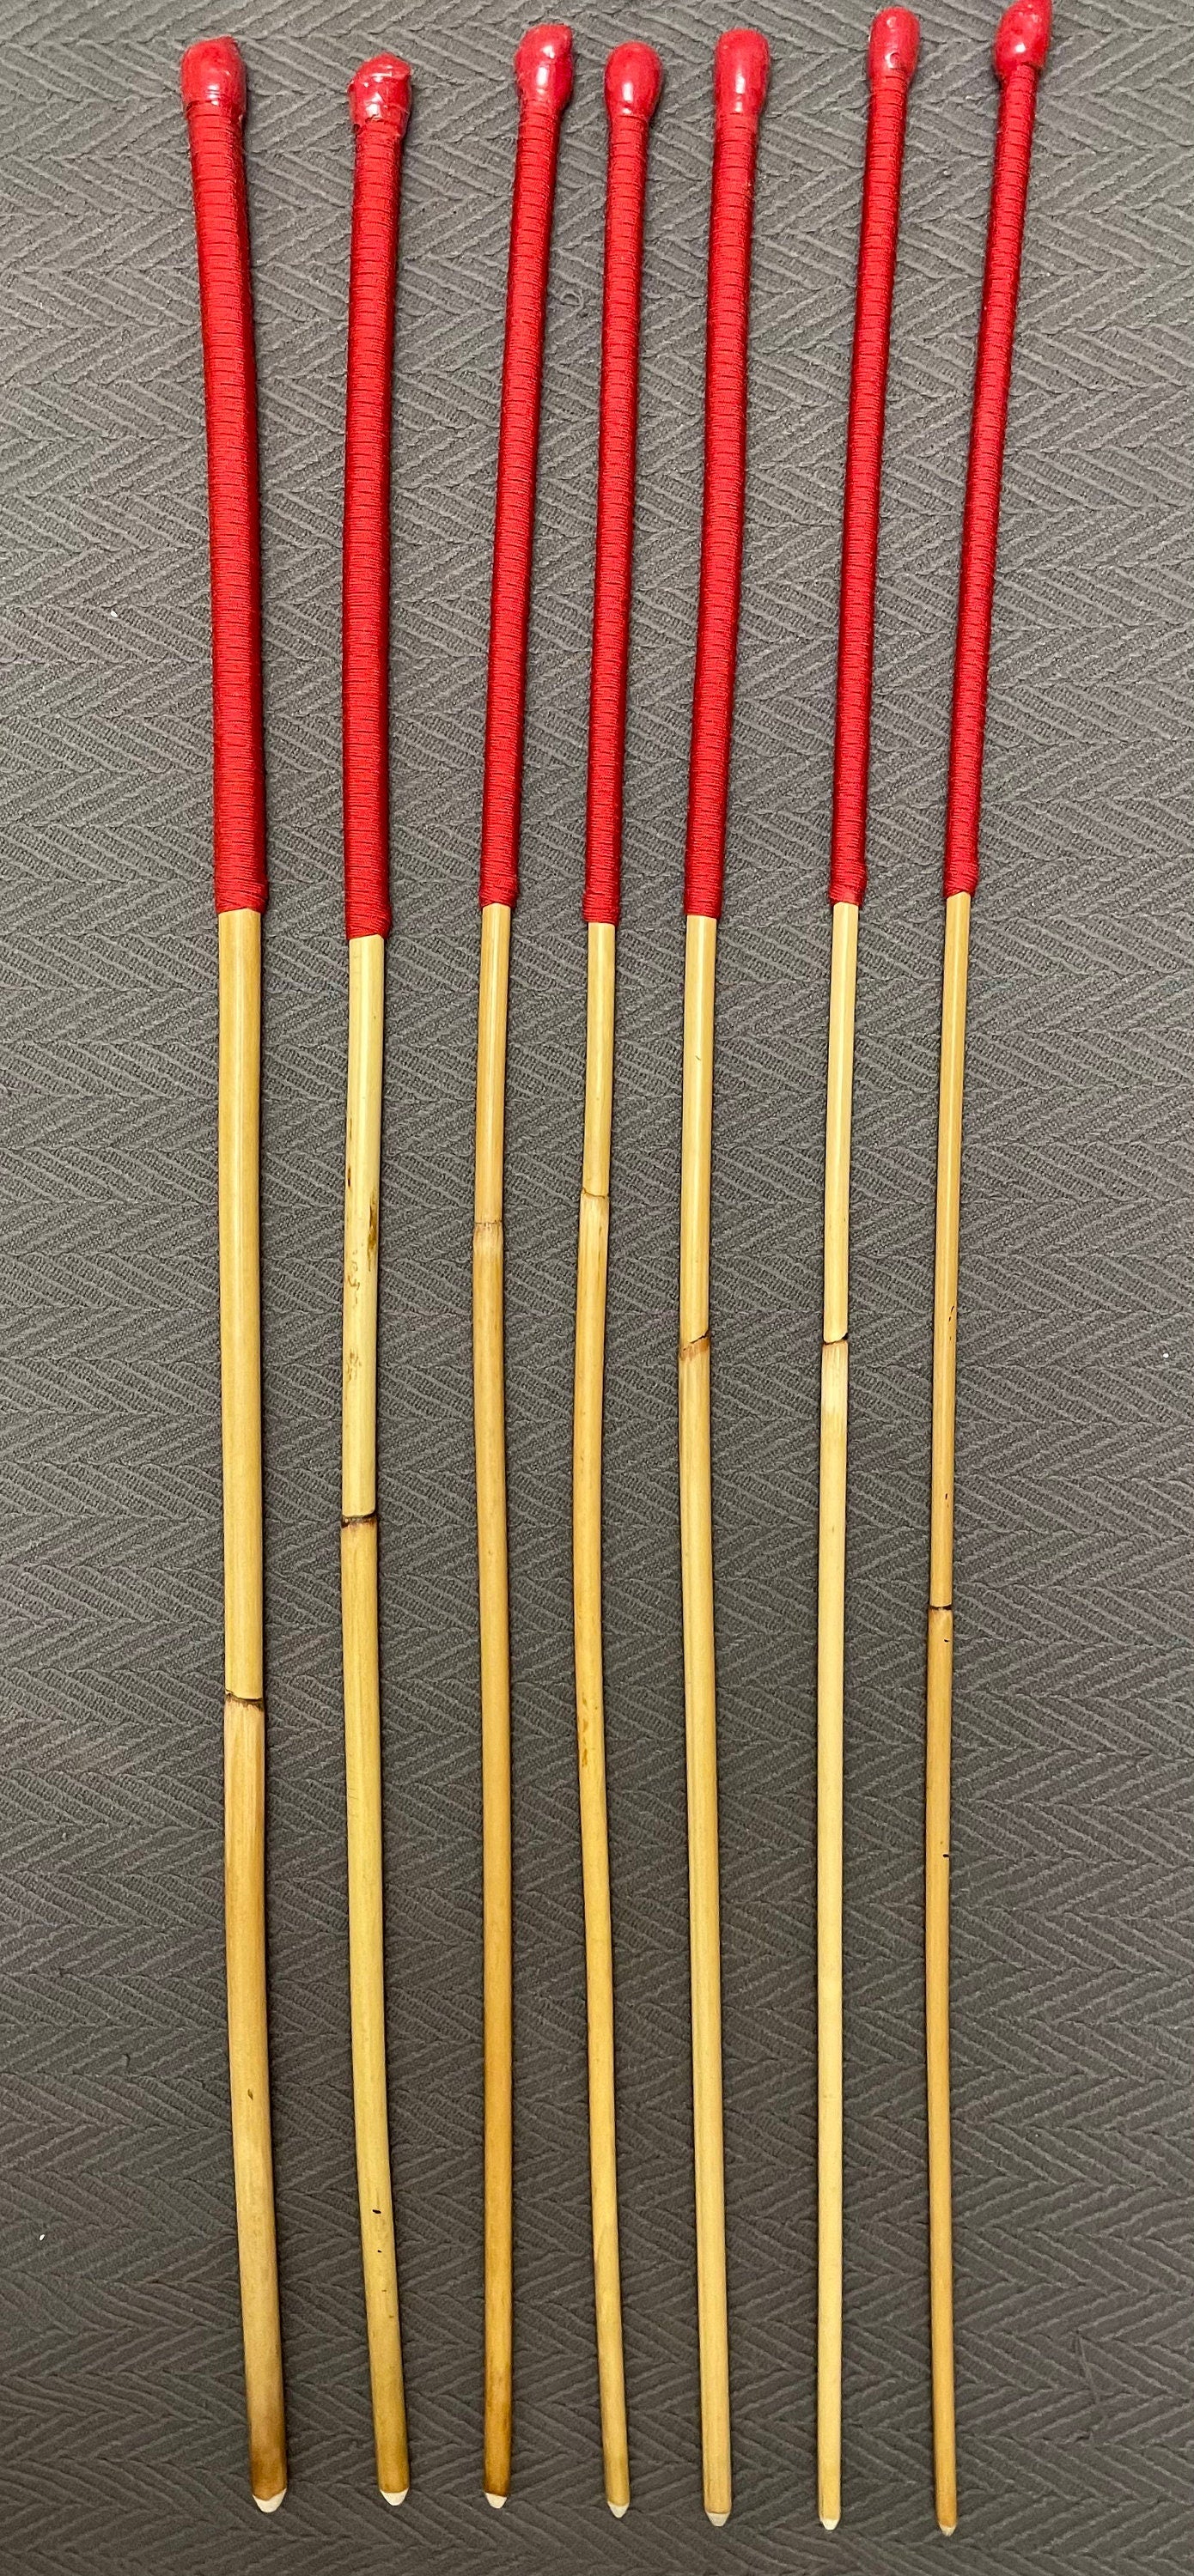 Set of 7 Classic Dragon Canes / School Canes / Punishment Canes / BDSM Canes - 90 cms Length - Red Paracord Handles